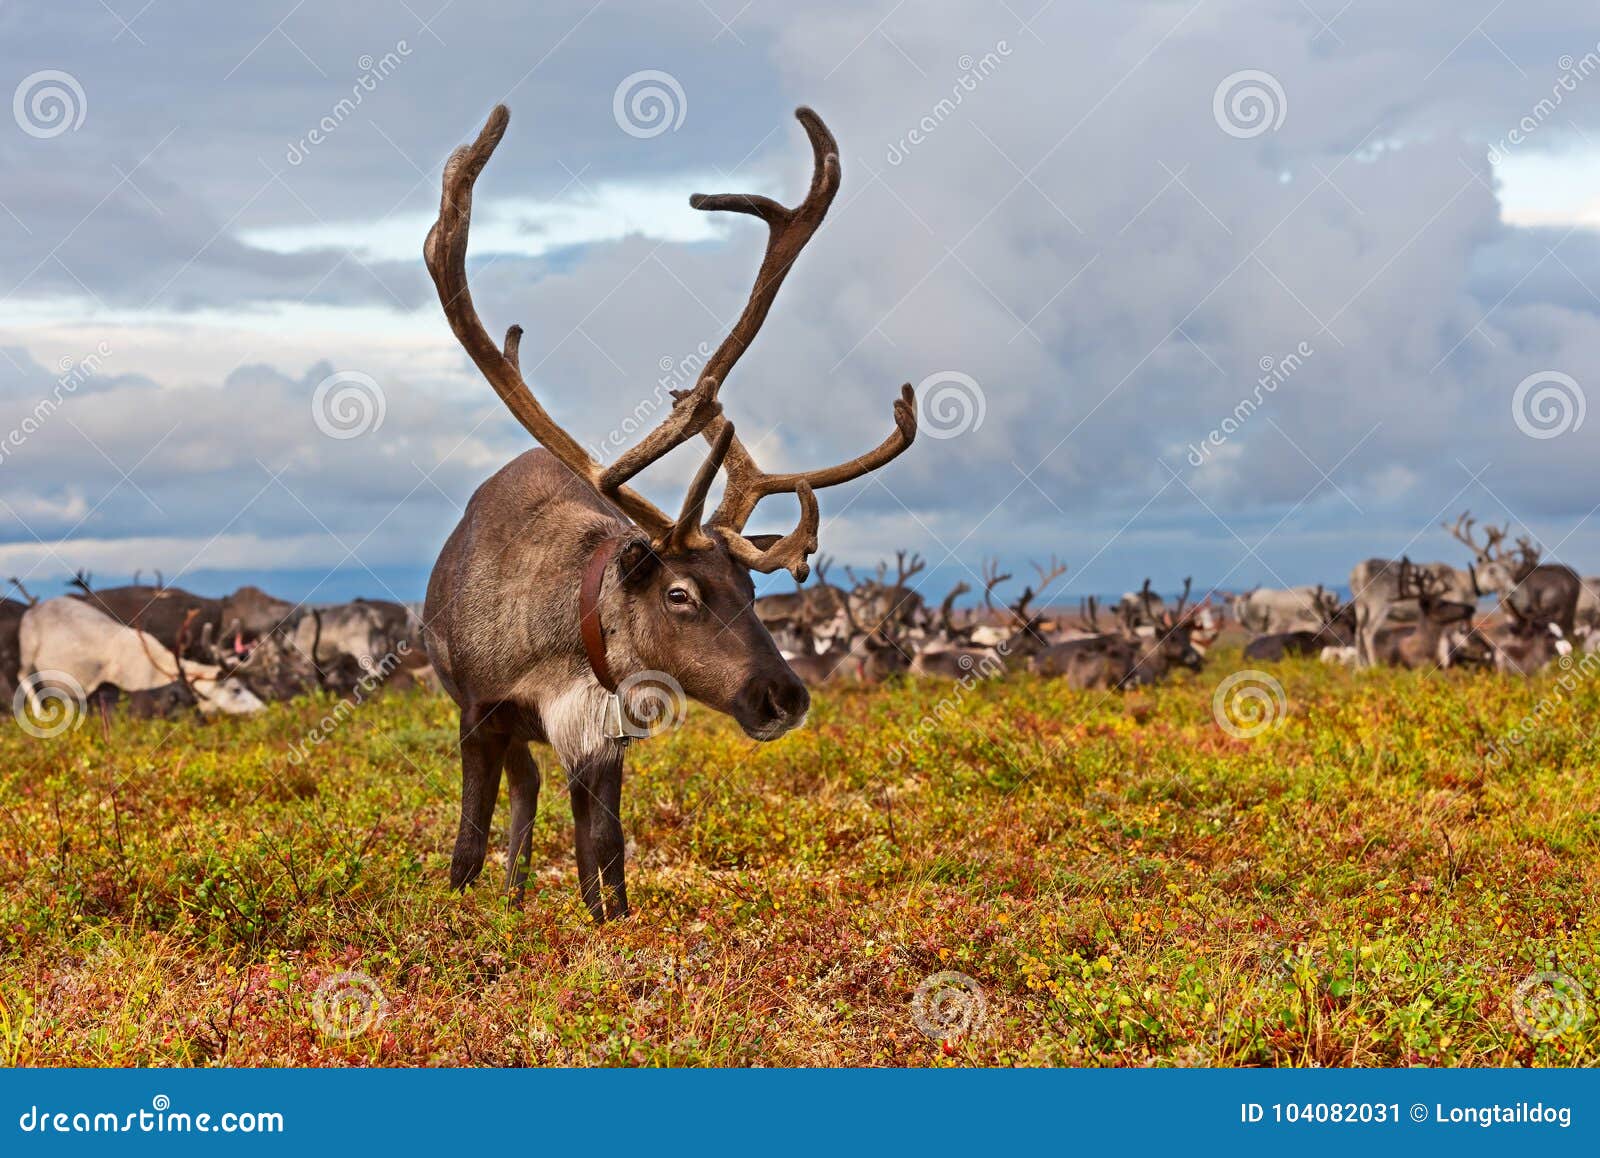 reindeer grazes in the polar tundra.